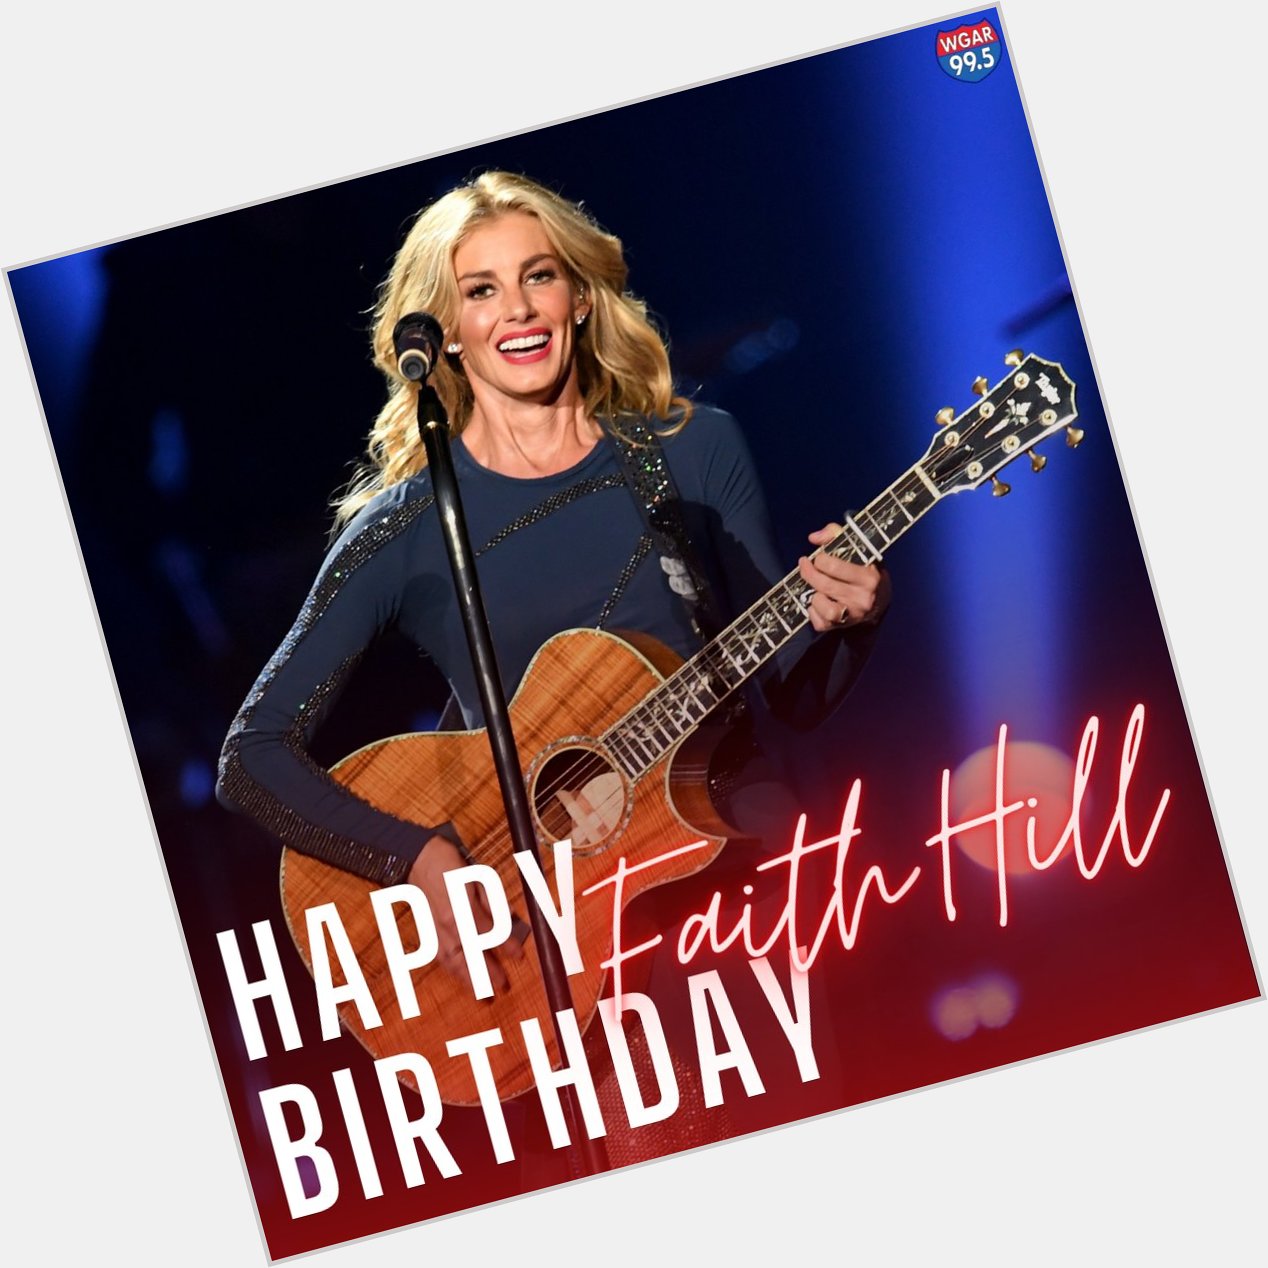 Happy Birthday   Celebrate by listening to Faith Hill Radio here:  